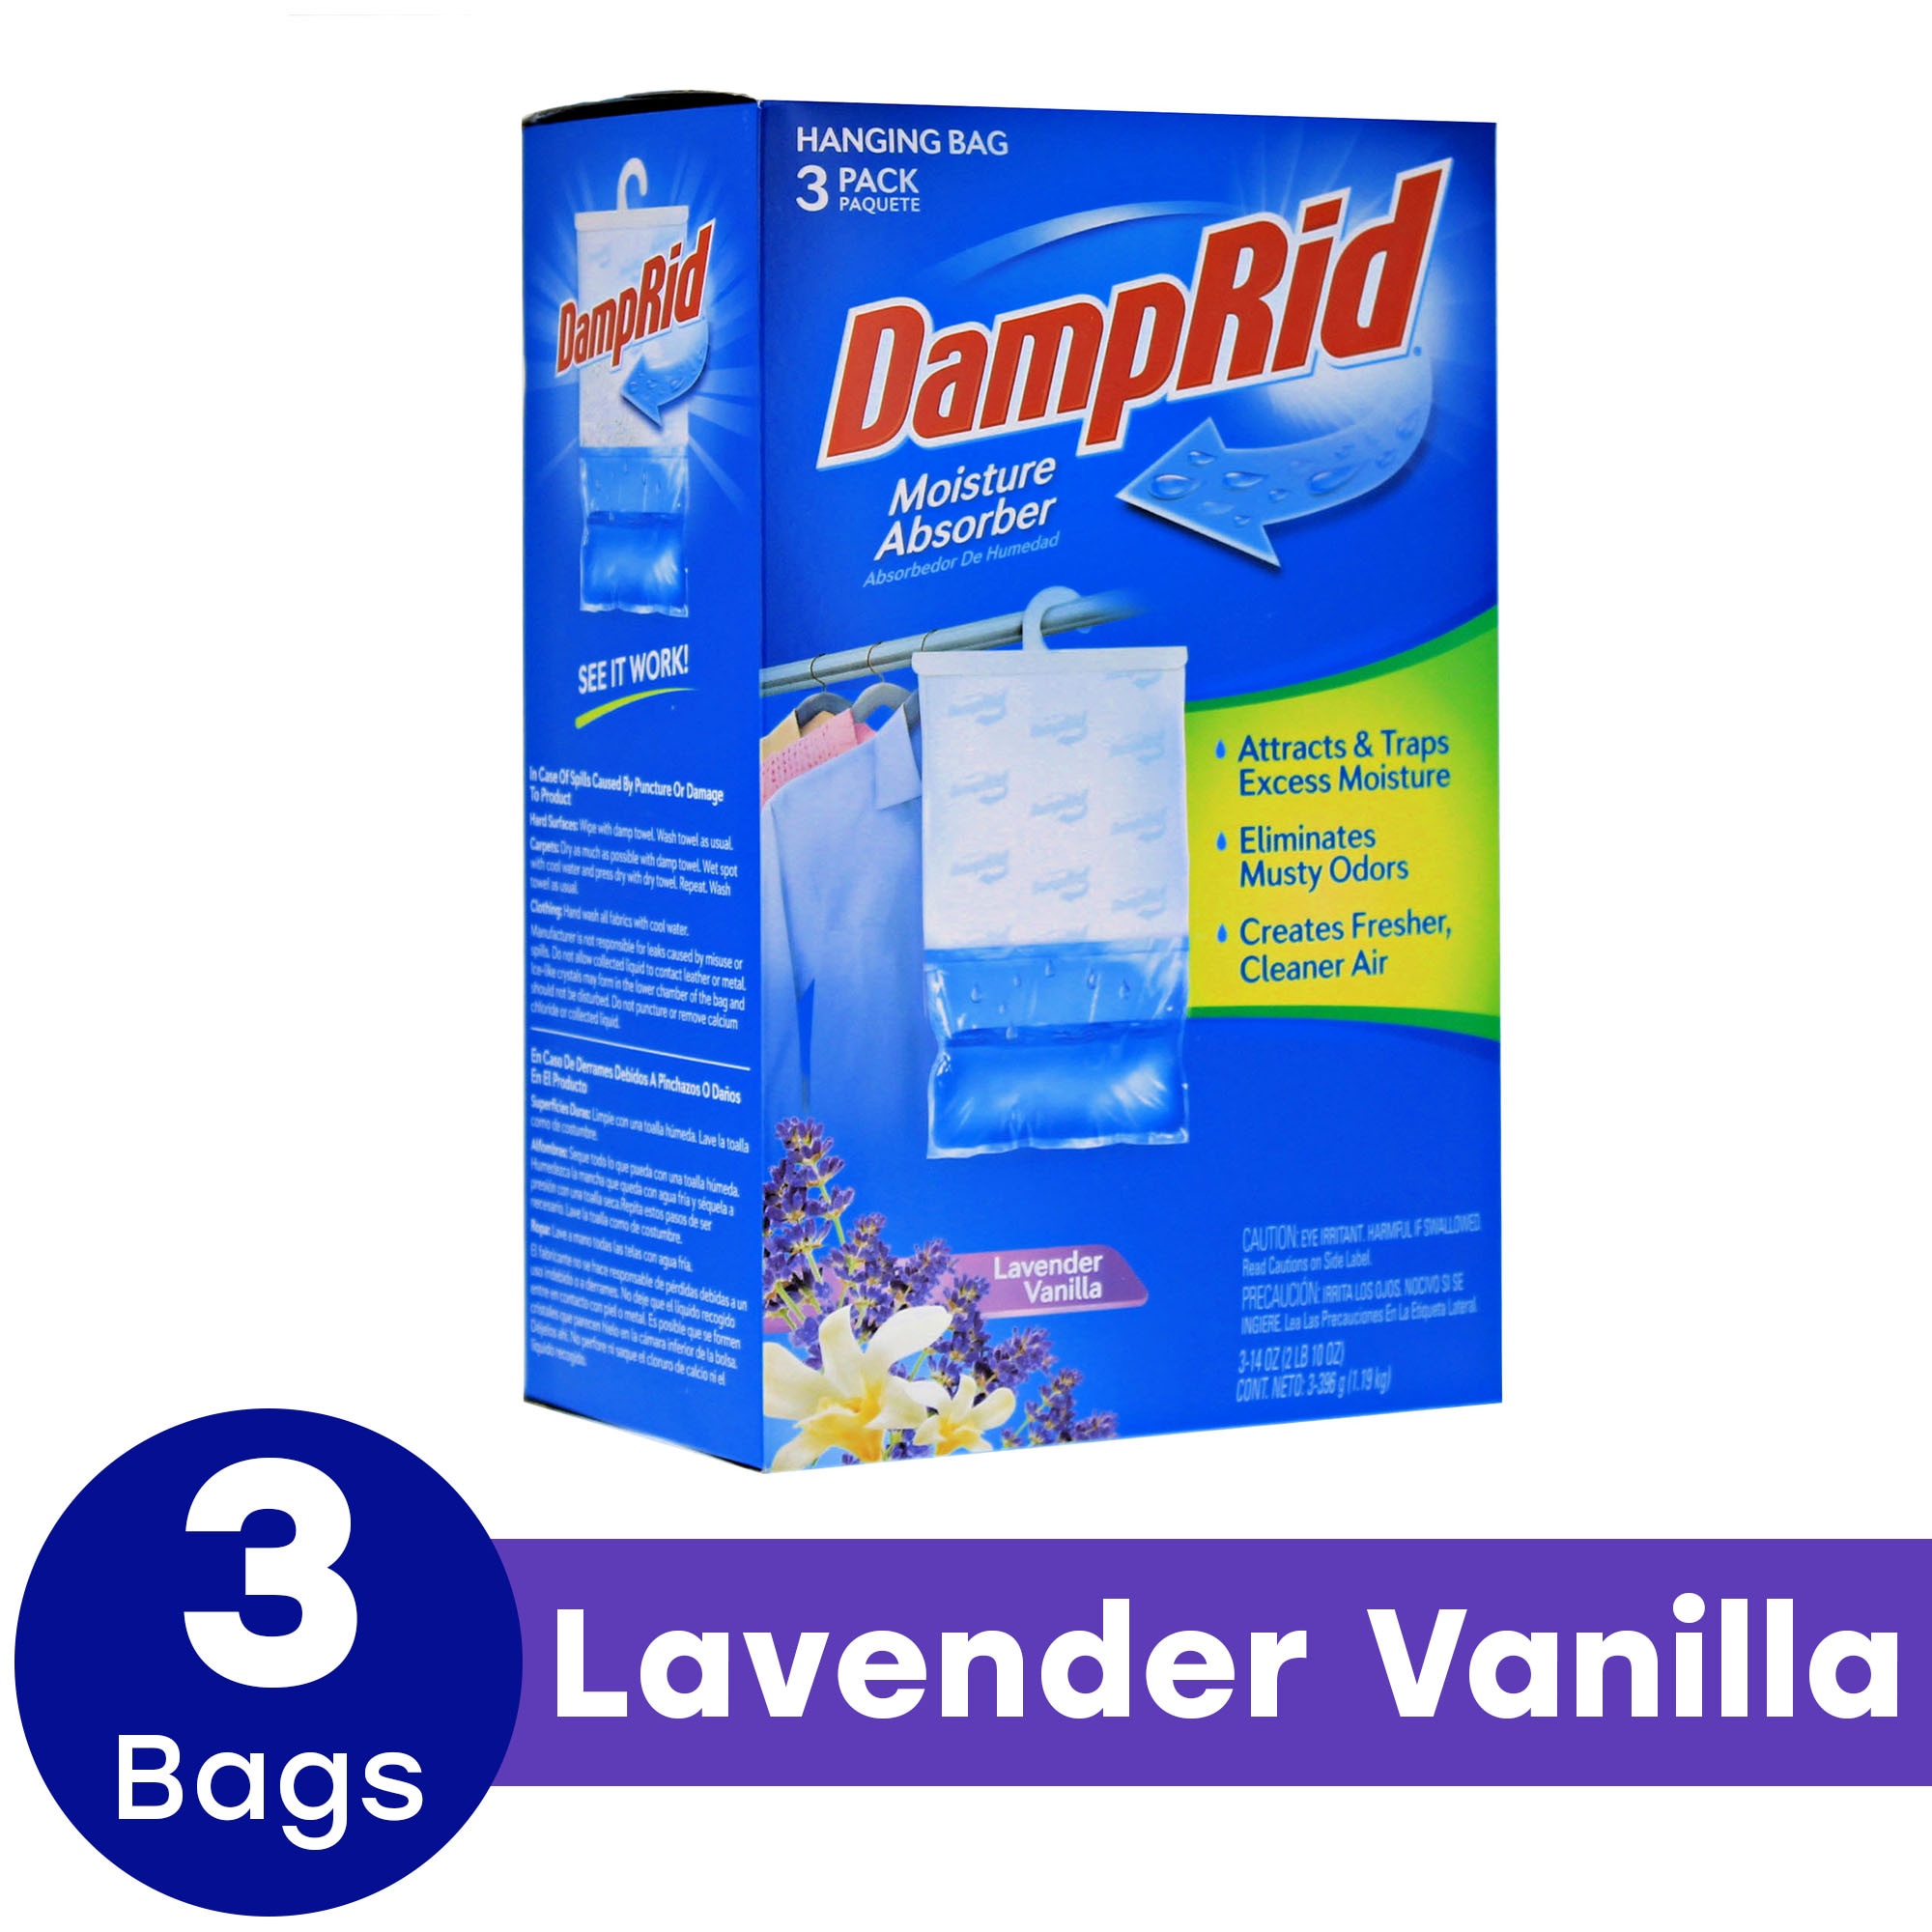 DampRid 42-oz Lavender Vanilla Hanging Moisture Absorber in the